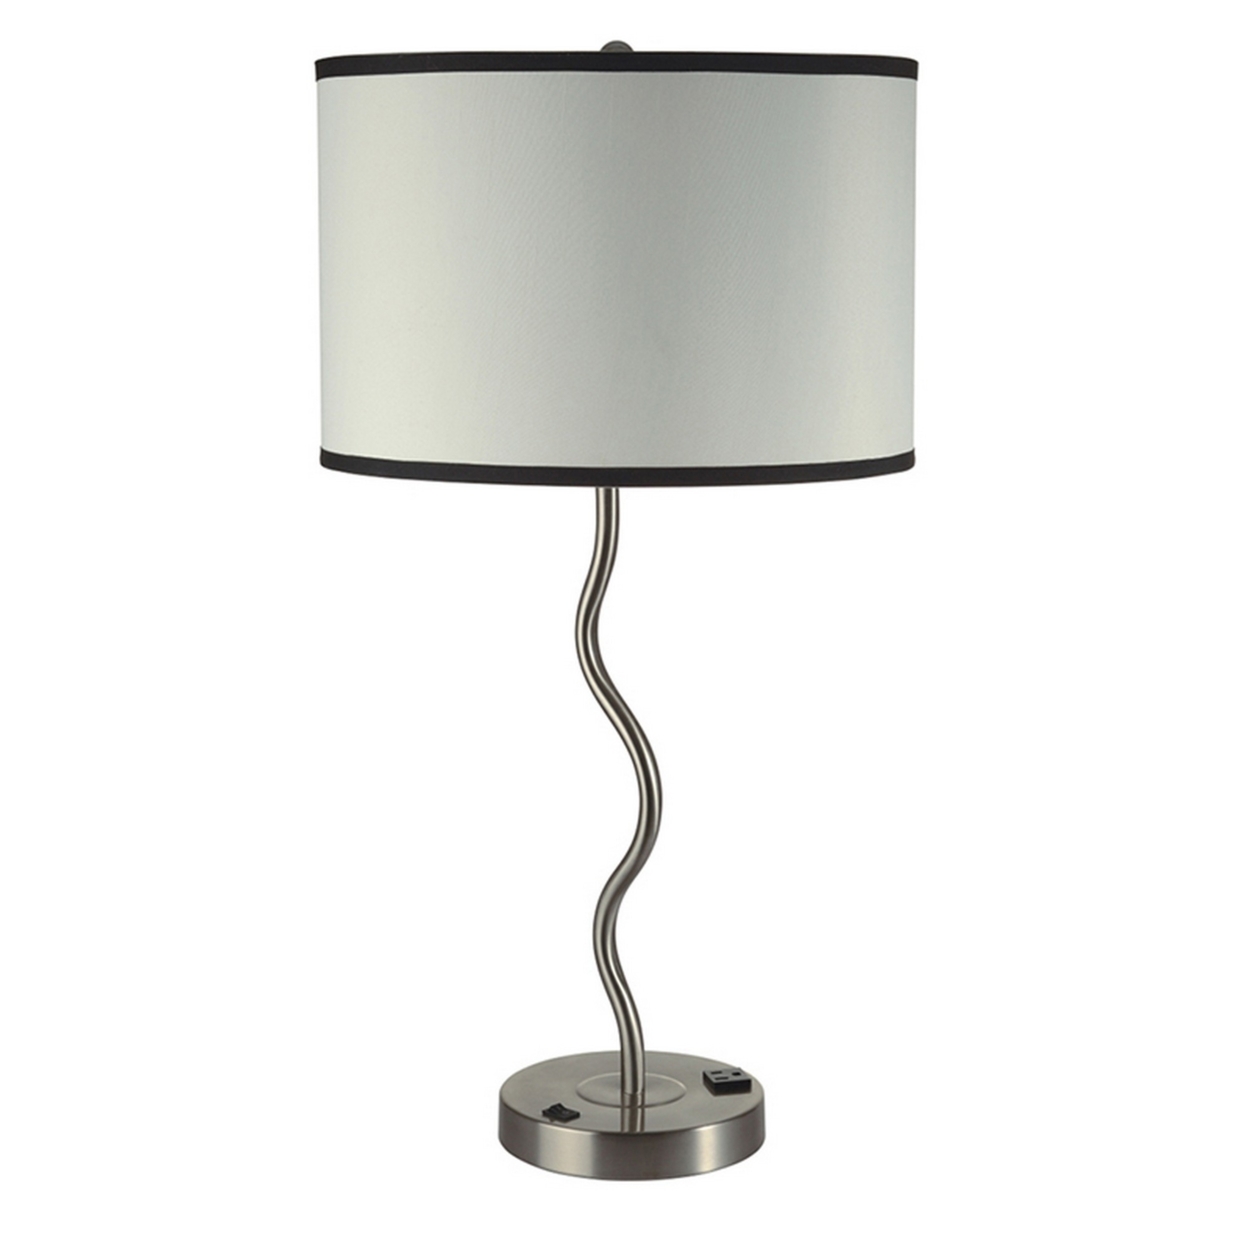 29 Inch Round Drum Shade Table Lamp, Curved Tubular Frame, Silver- Saltoro Sherpi